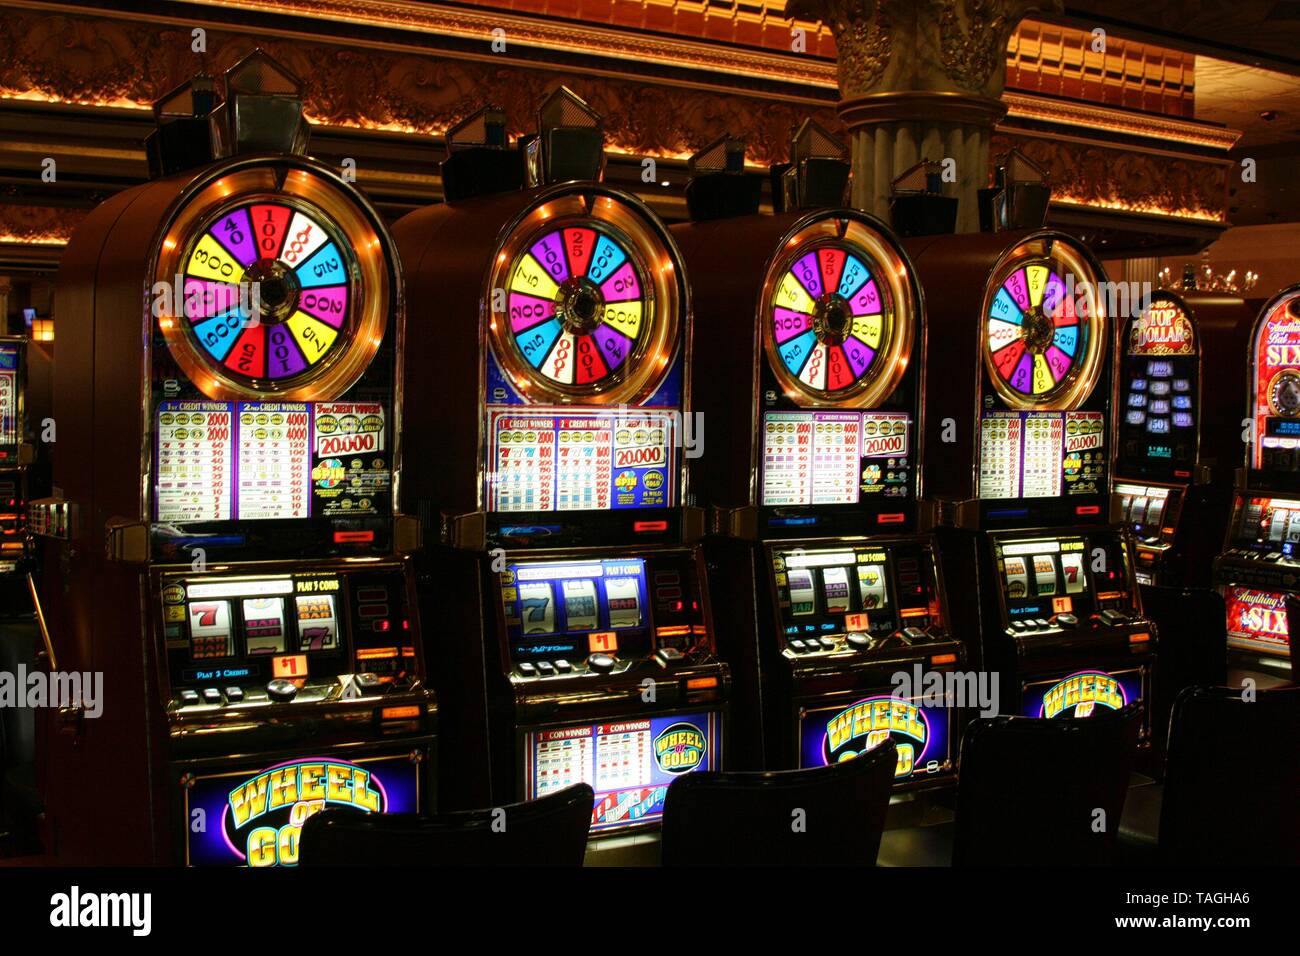 Vegas grand casino зеркало на андроид. Зеркало казино Вегас Гранд. Казино вегас2 на Ладожской. Казино Вегас в Санкт Петербурге. Wildblaster казино.